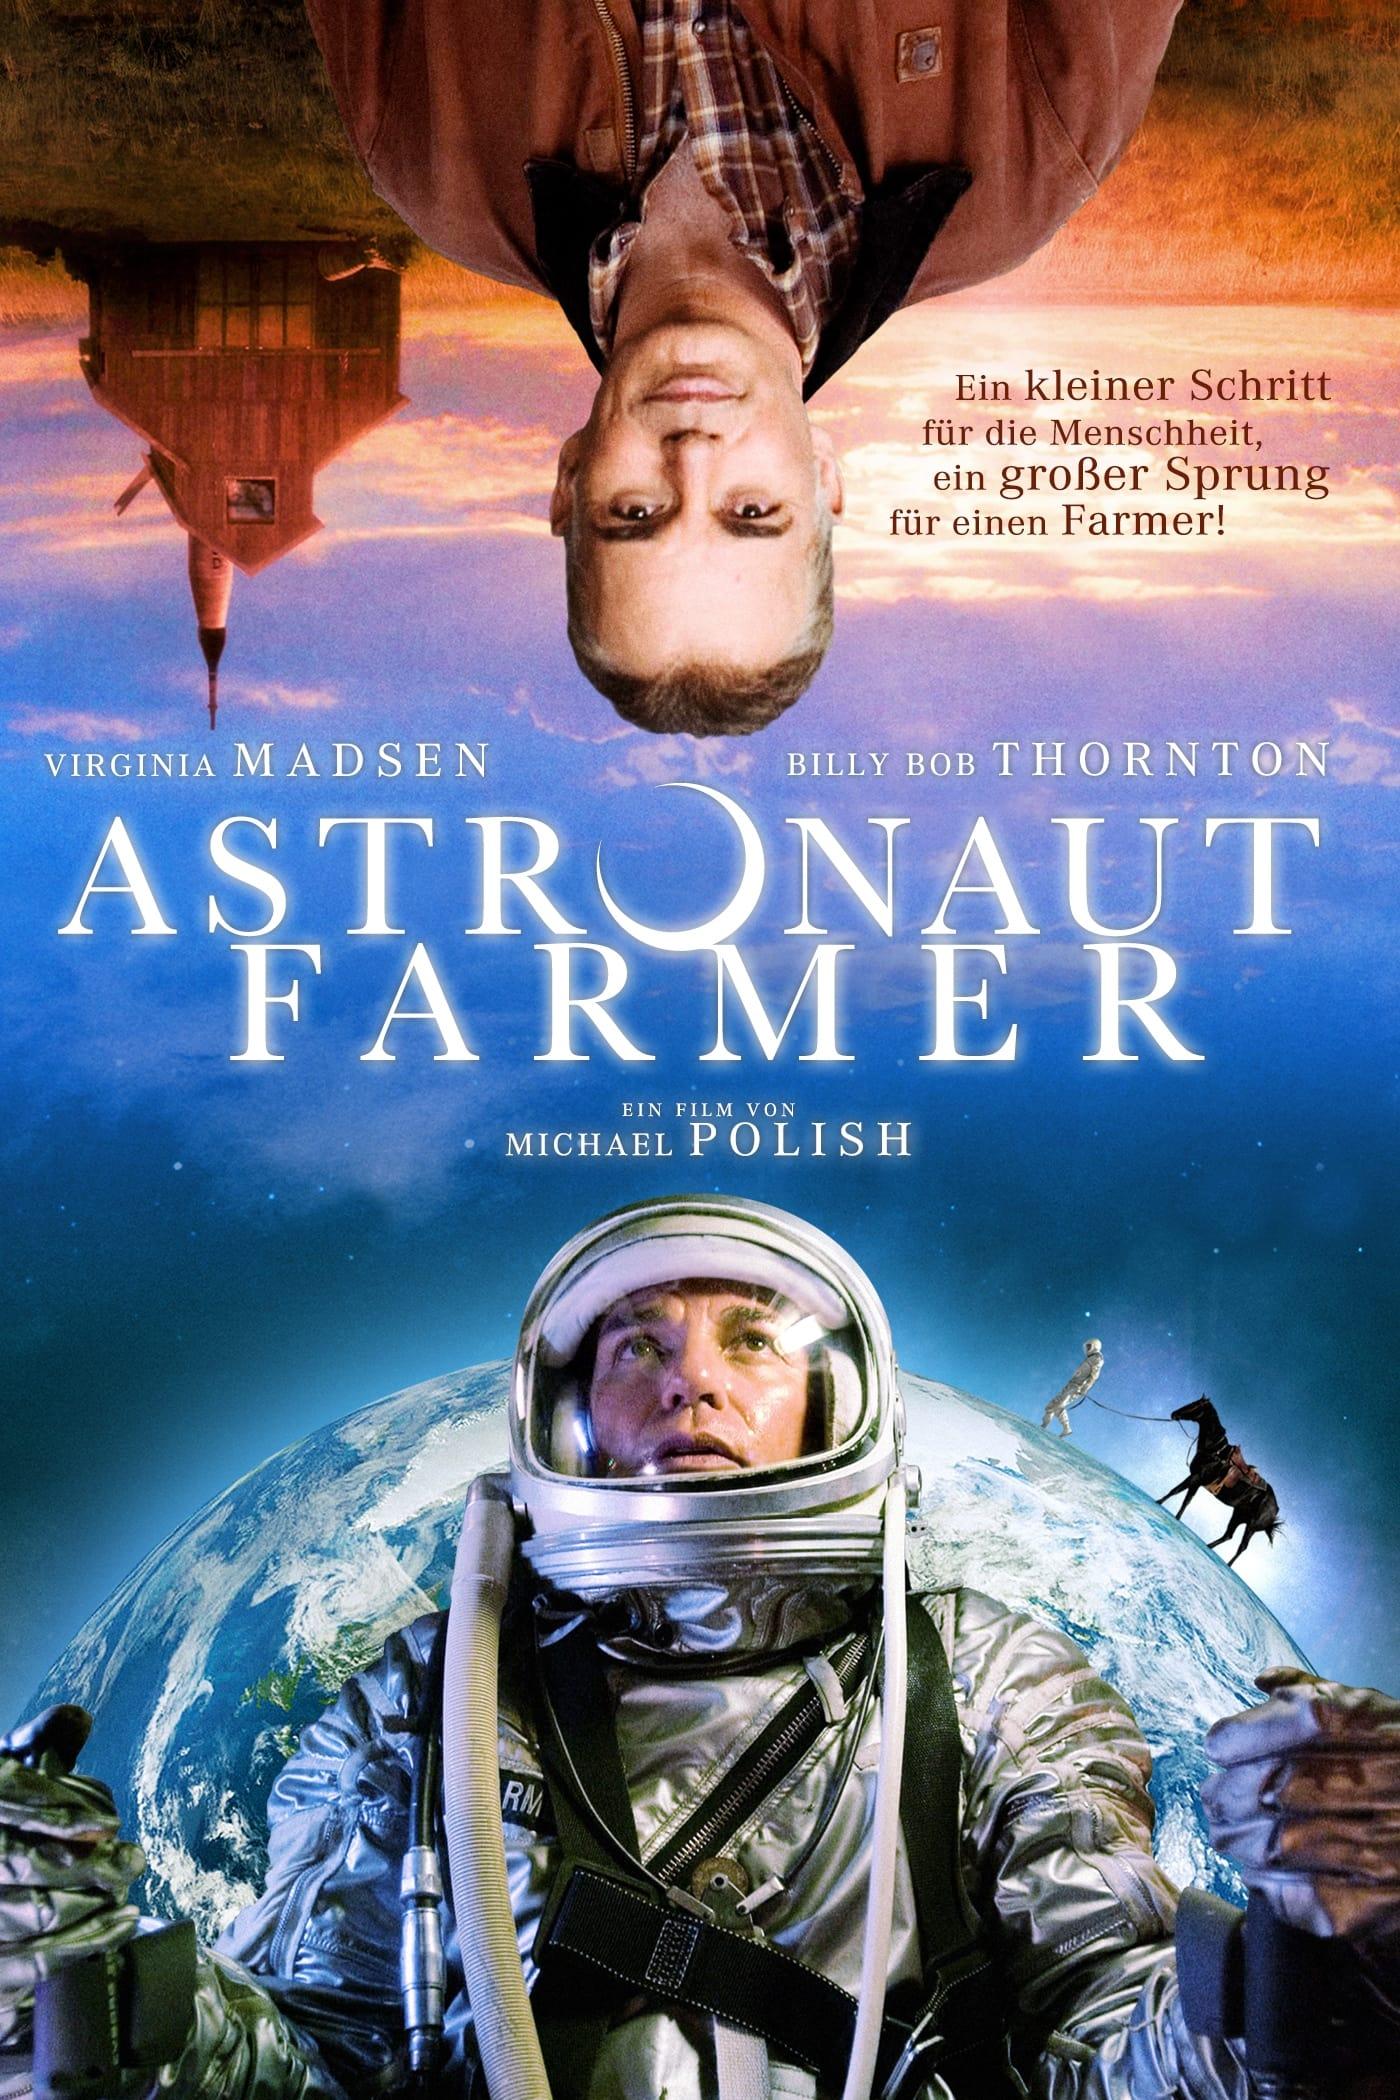 Astronaut Farmer poster